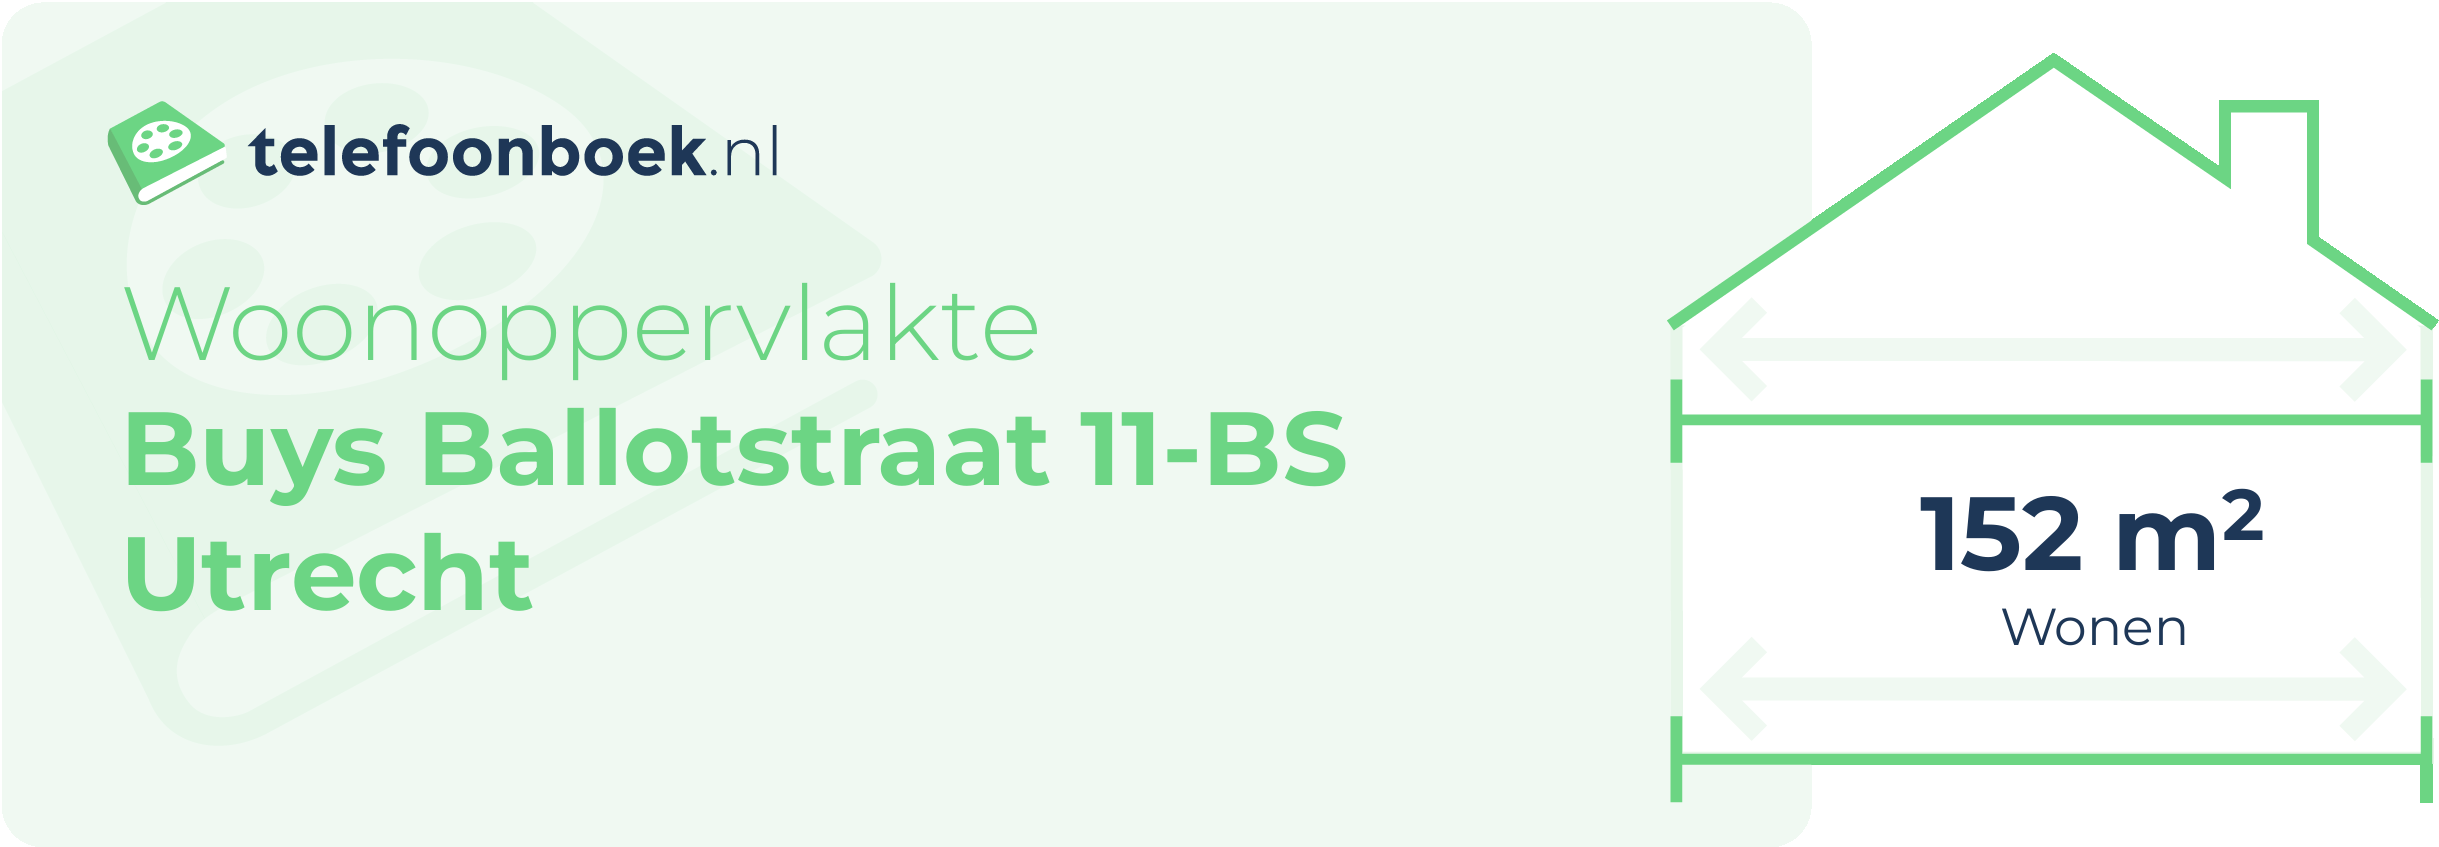 Woonoppervlakte Buys Ballotstraat 11-BS Utrecht